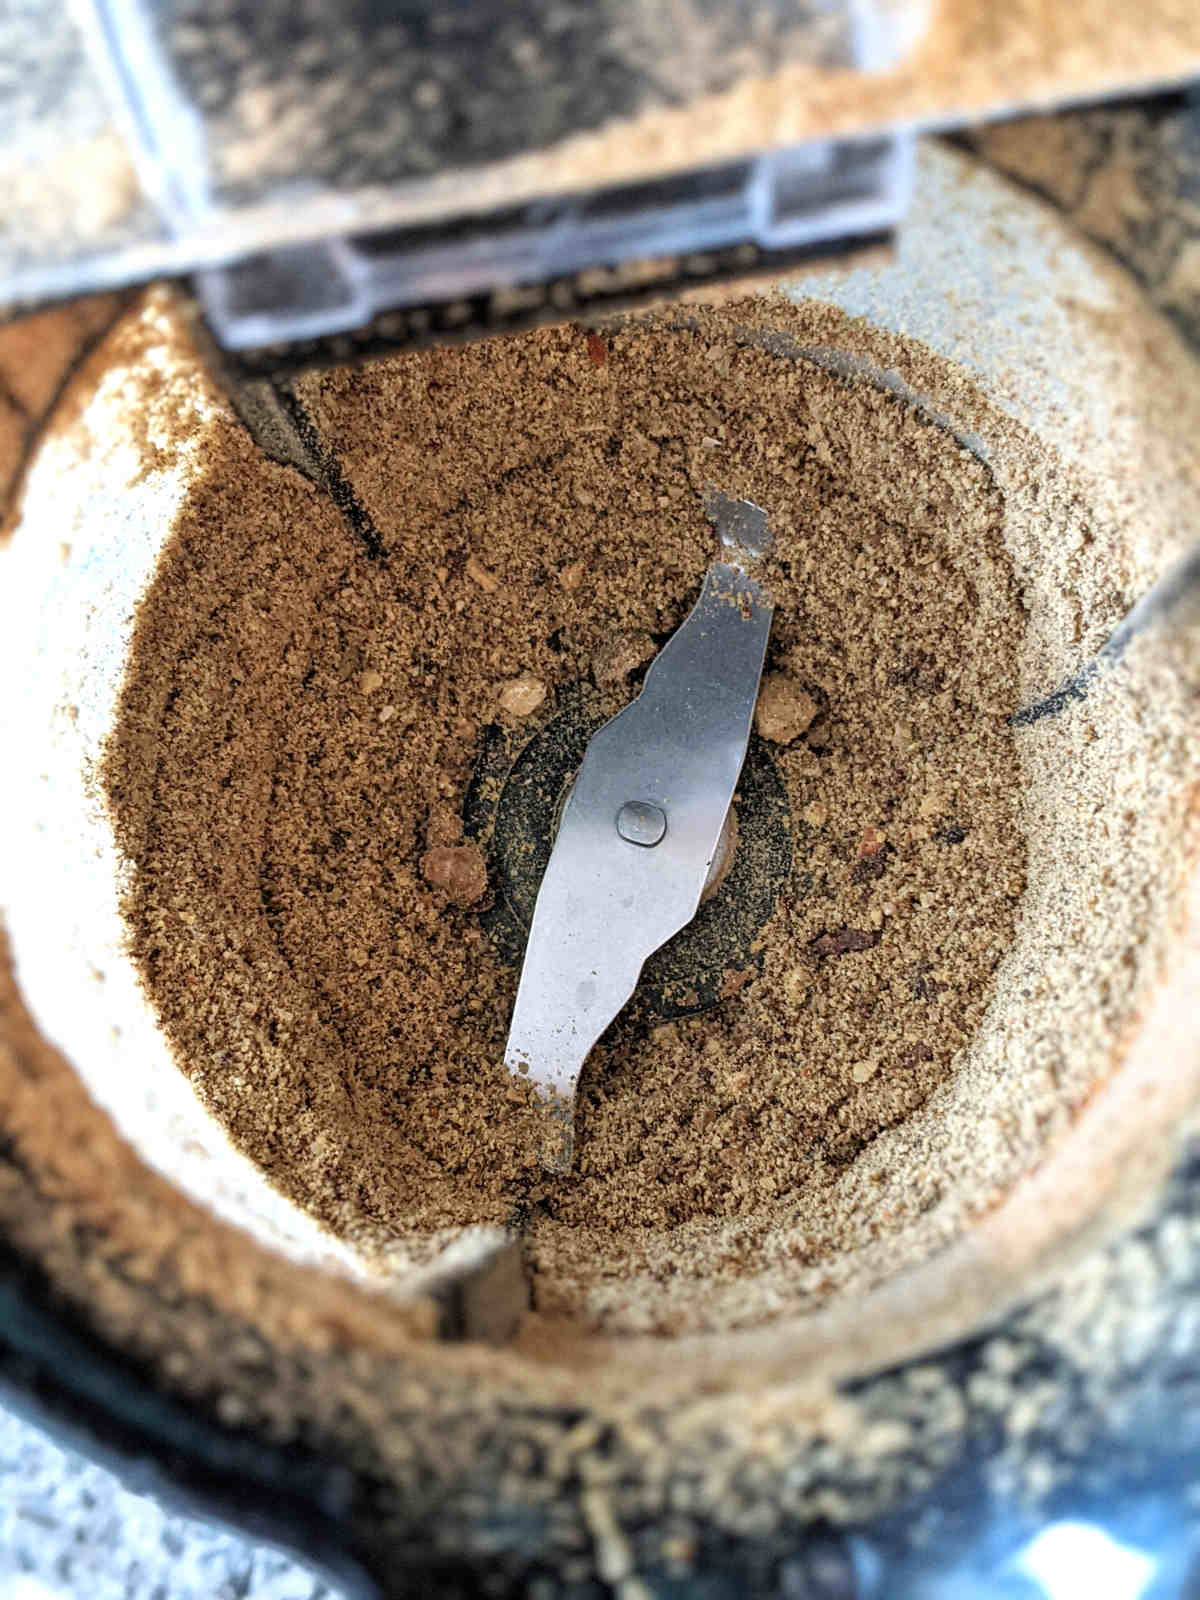 Ground up pickling spice in a grinder.